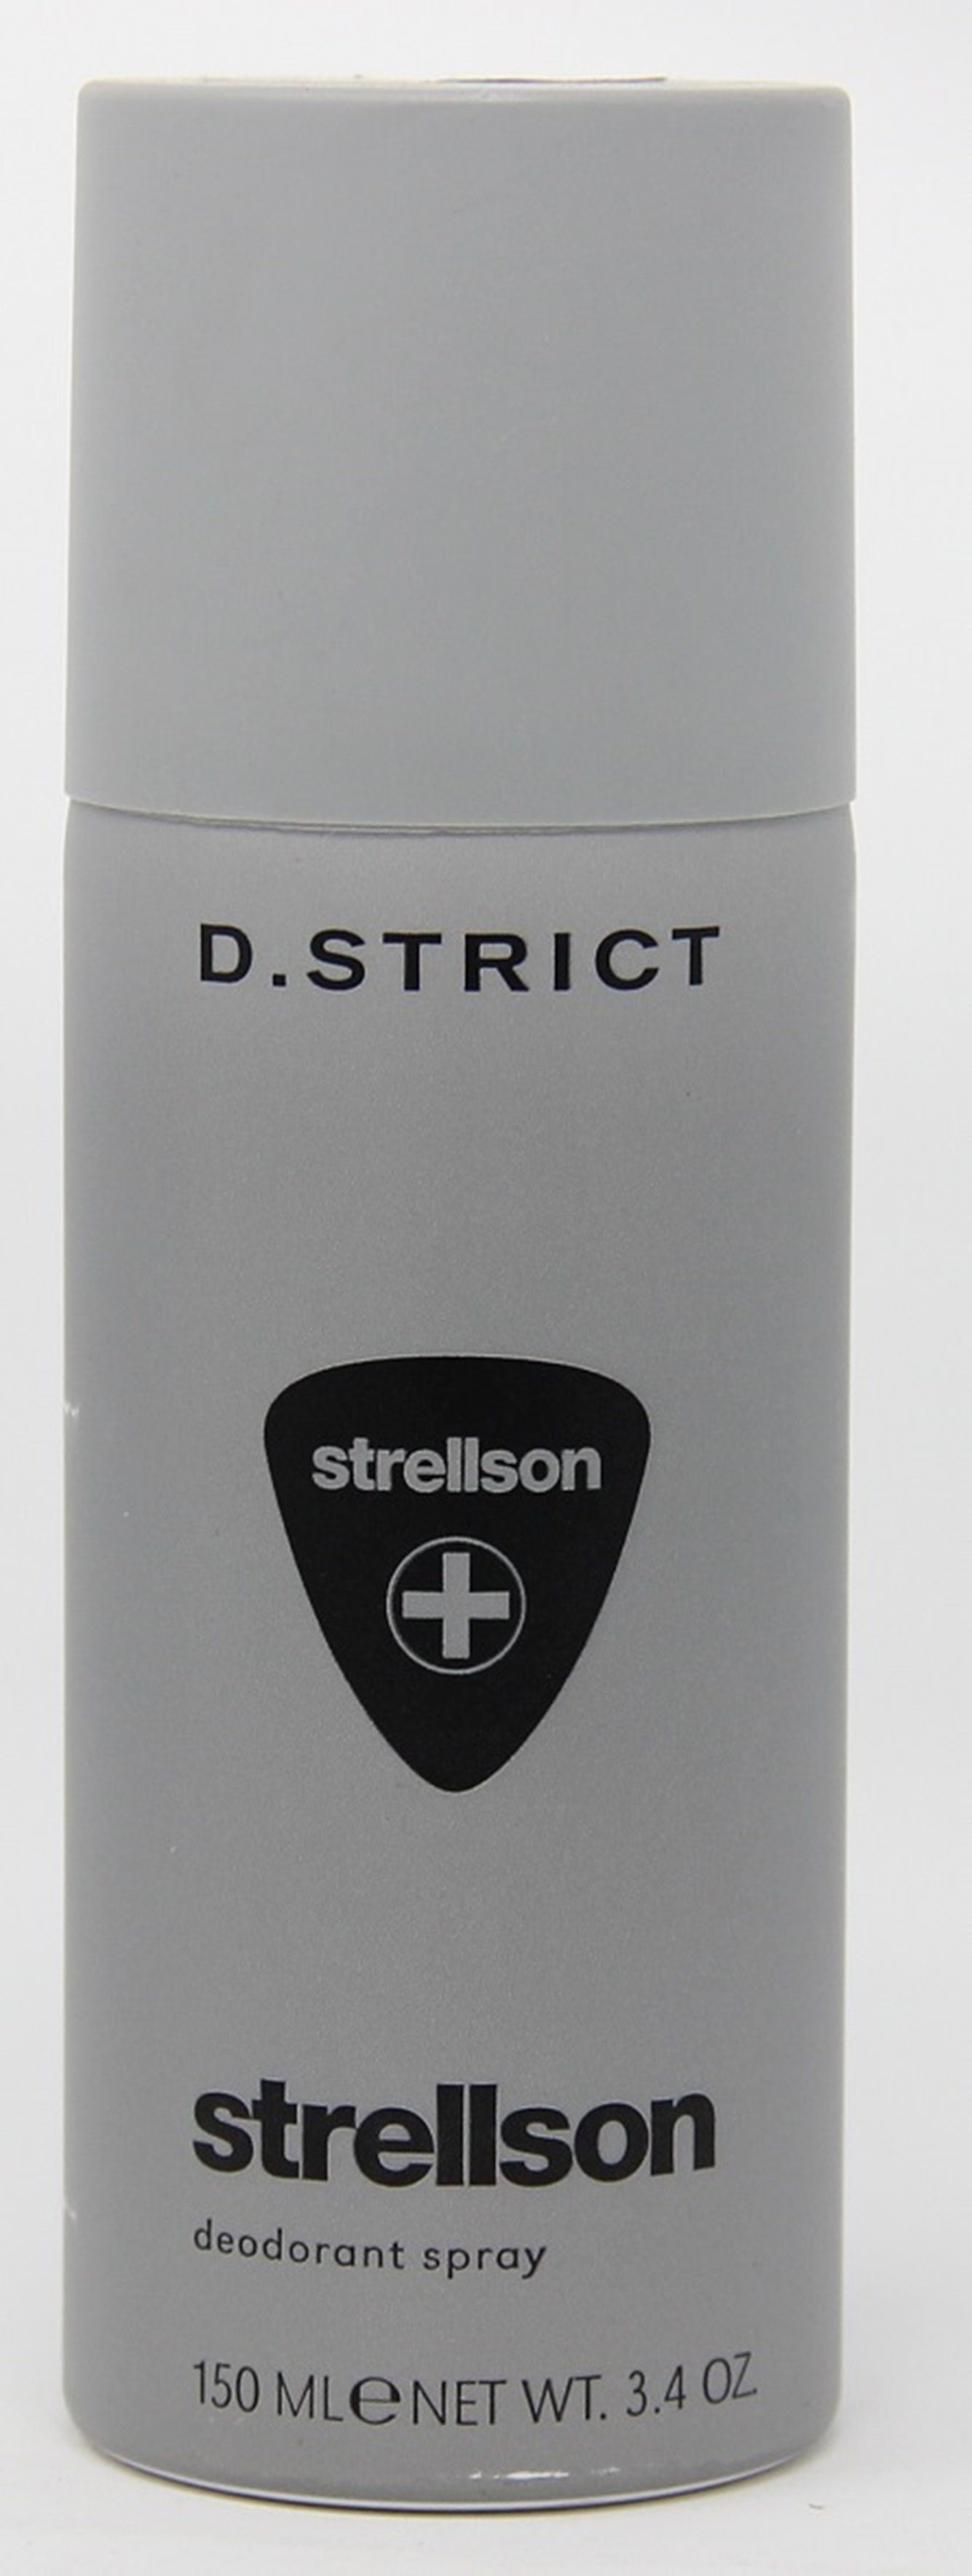 Strellson Spray Deodorant Strellson 150ml D.Strict Deo-Spray